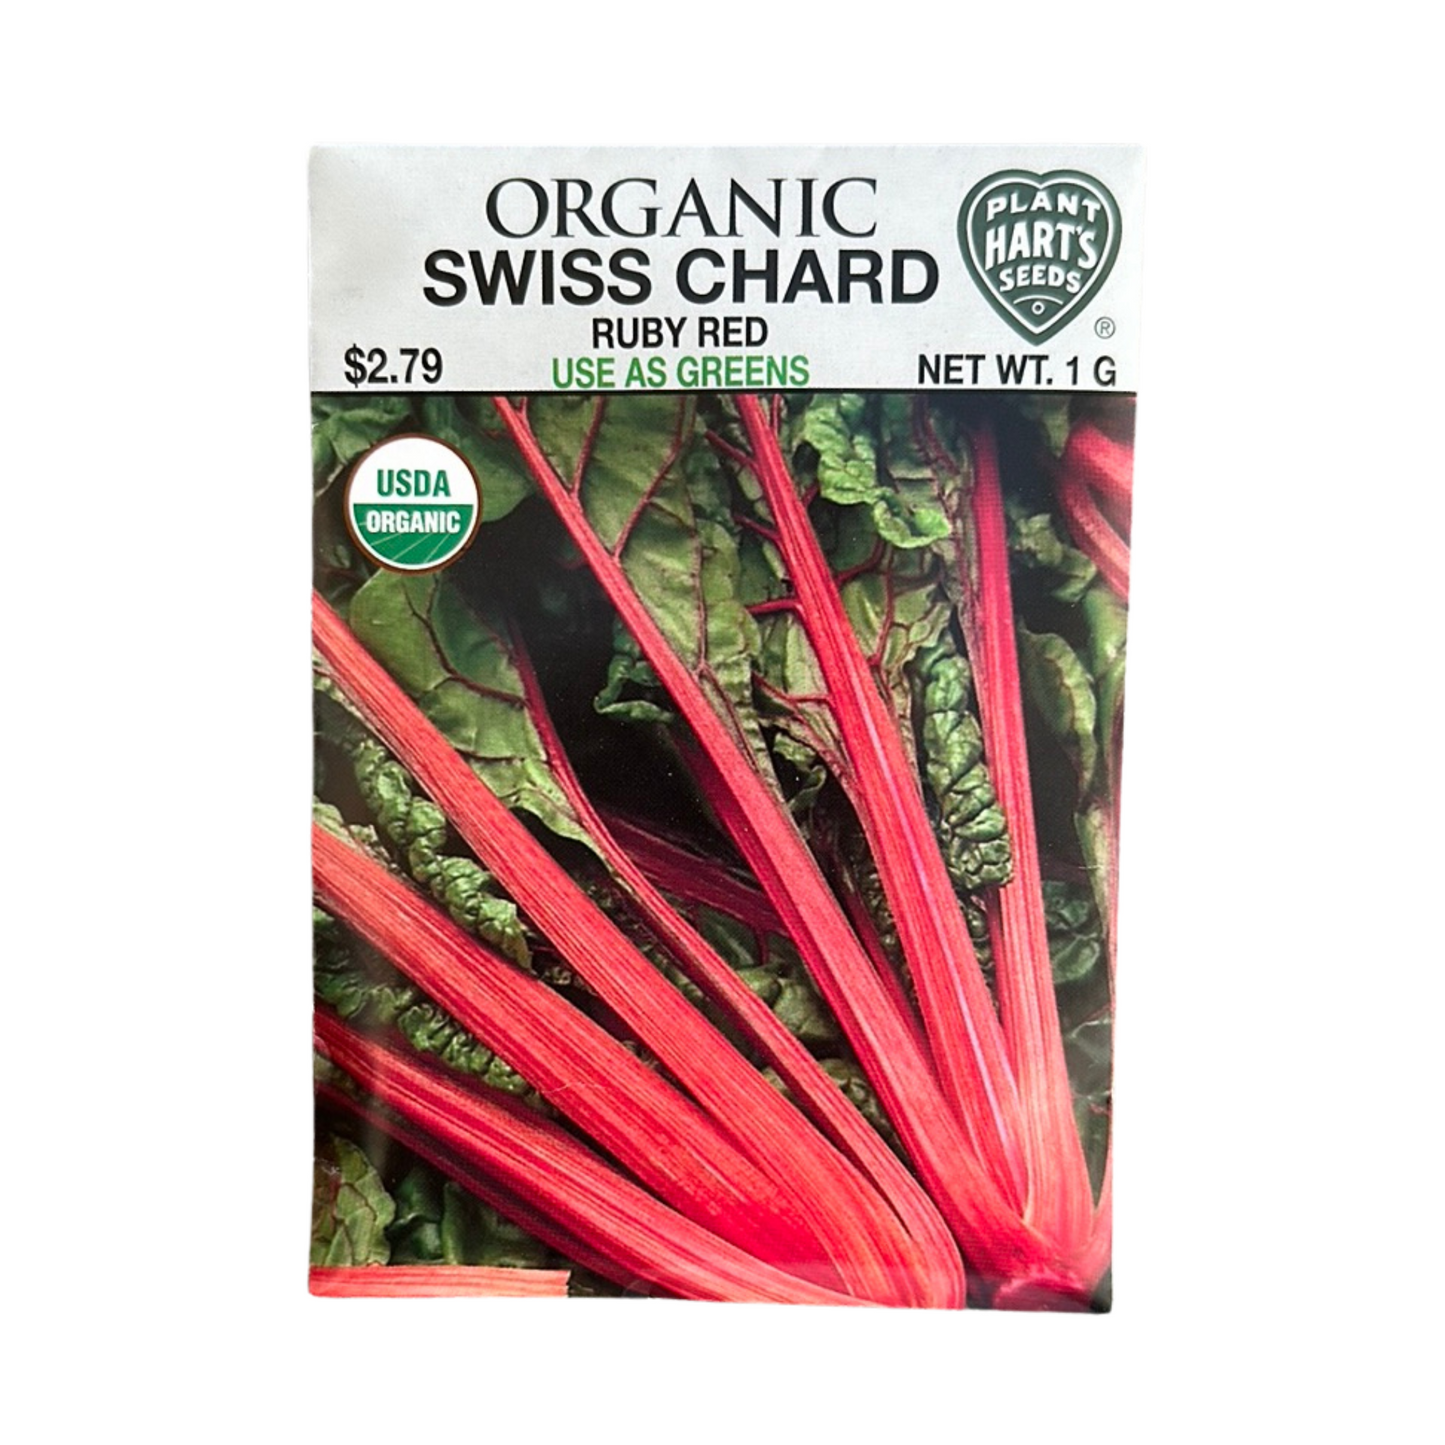 Organic Swiss Chard Ruby Red